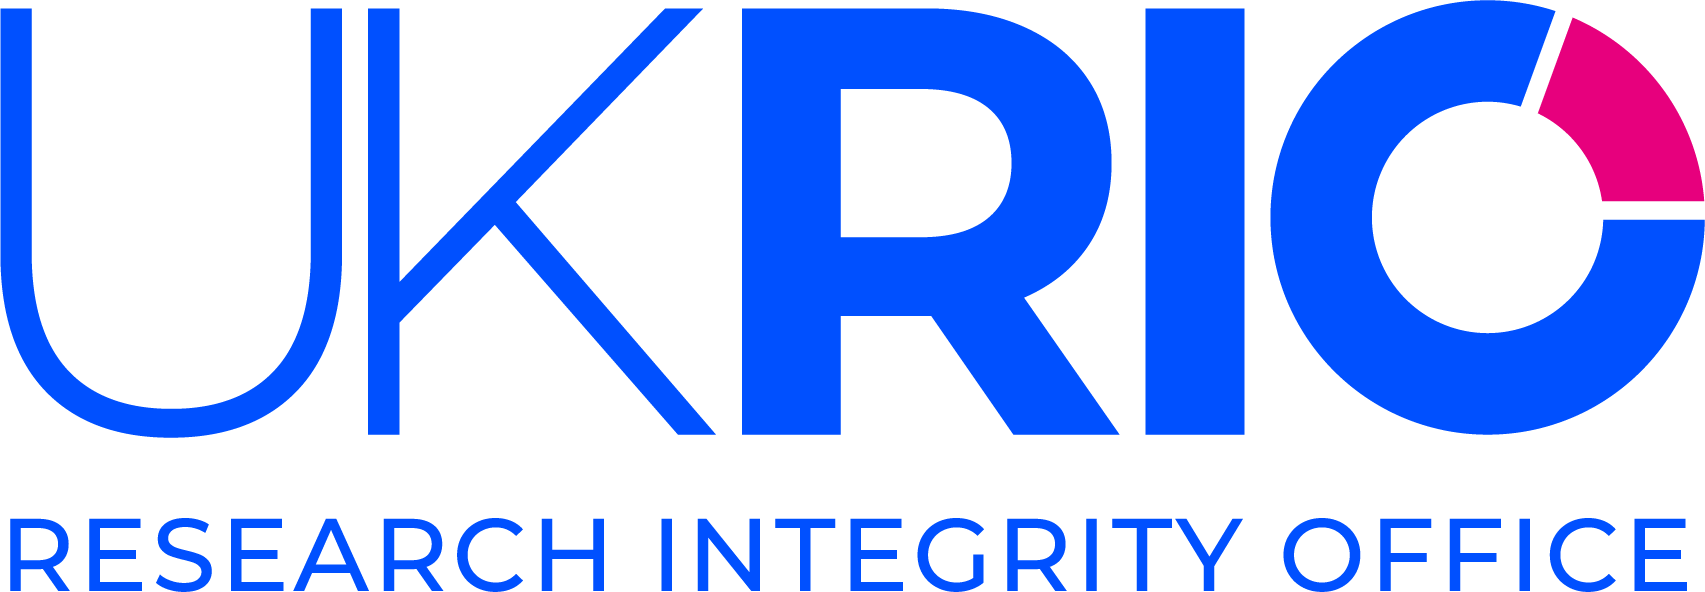 UKRIO Logo